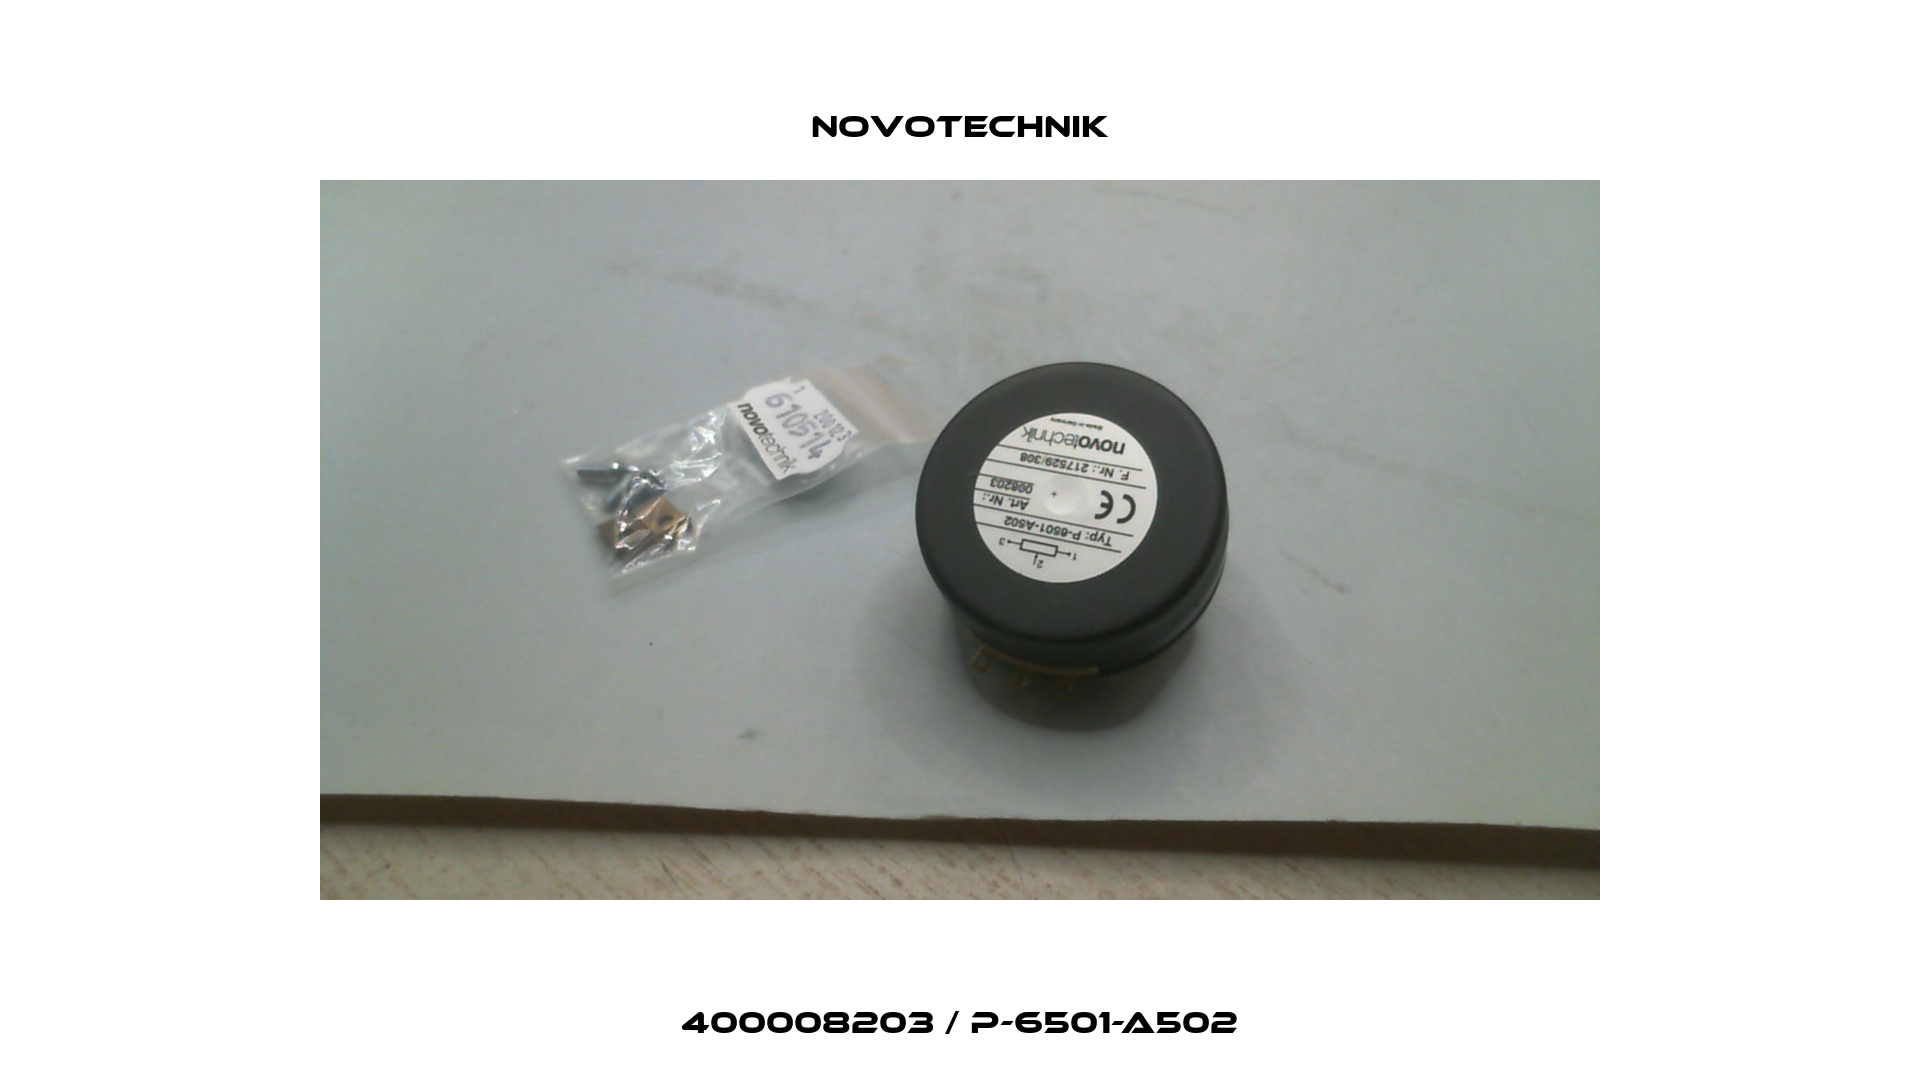 400008203 / P-6501-A502 Novotechnik